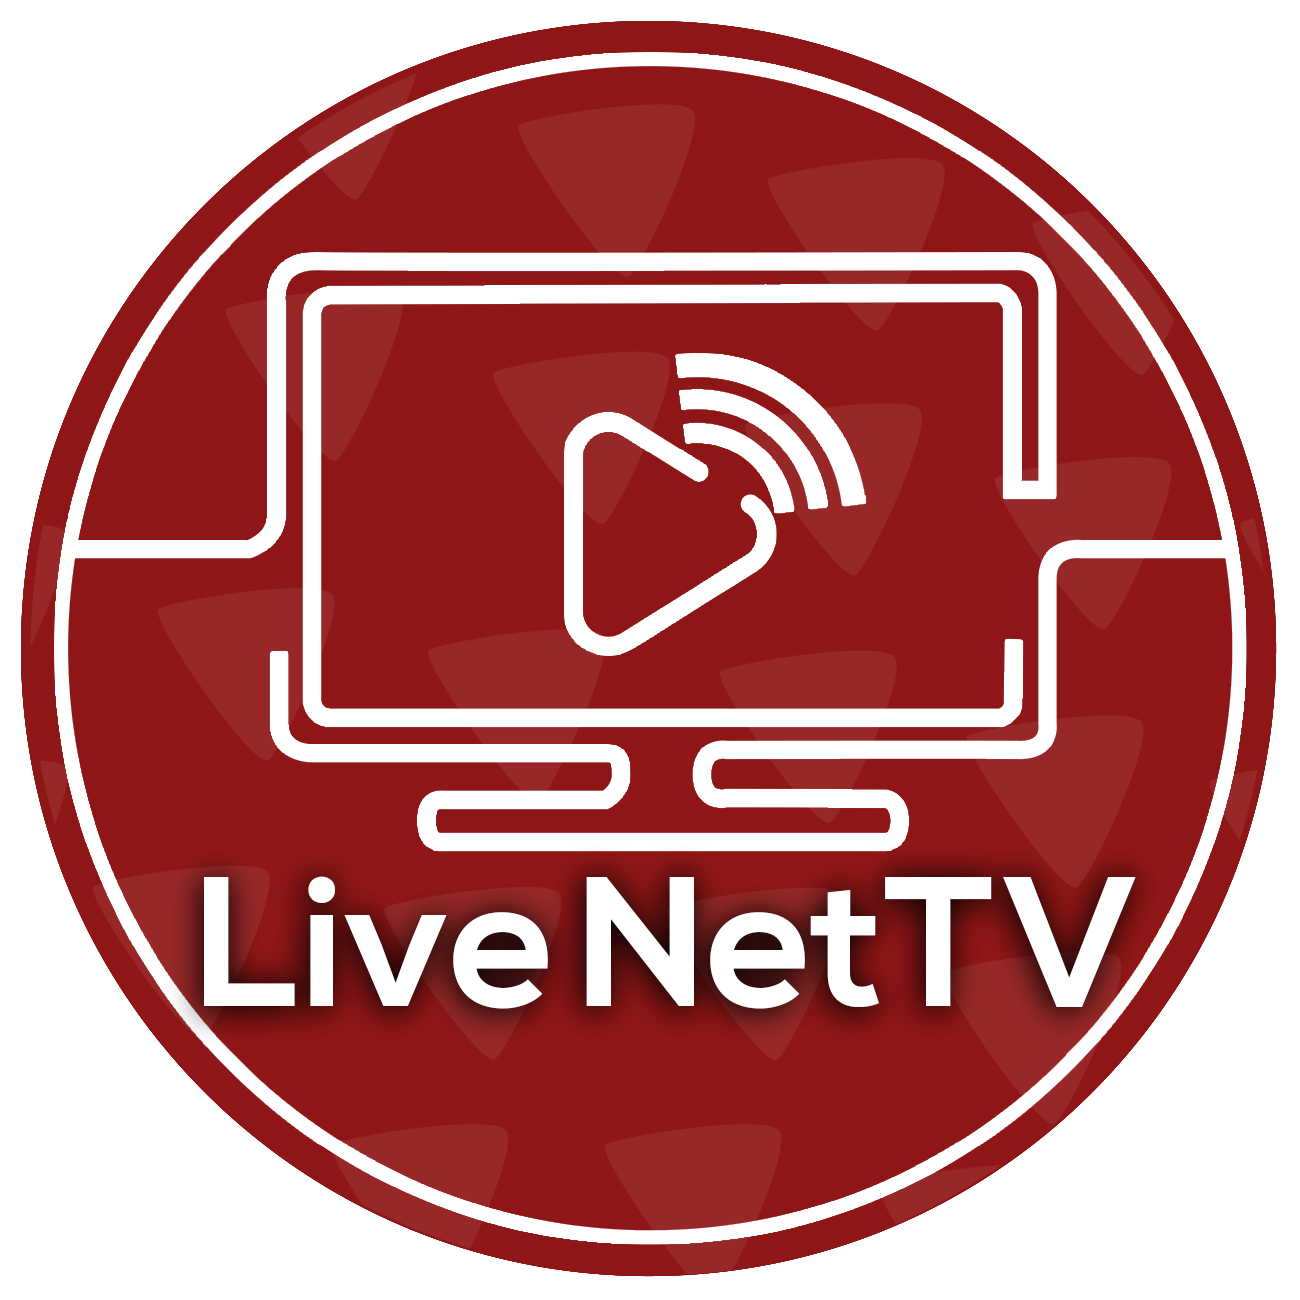 livenet Tv